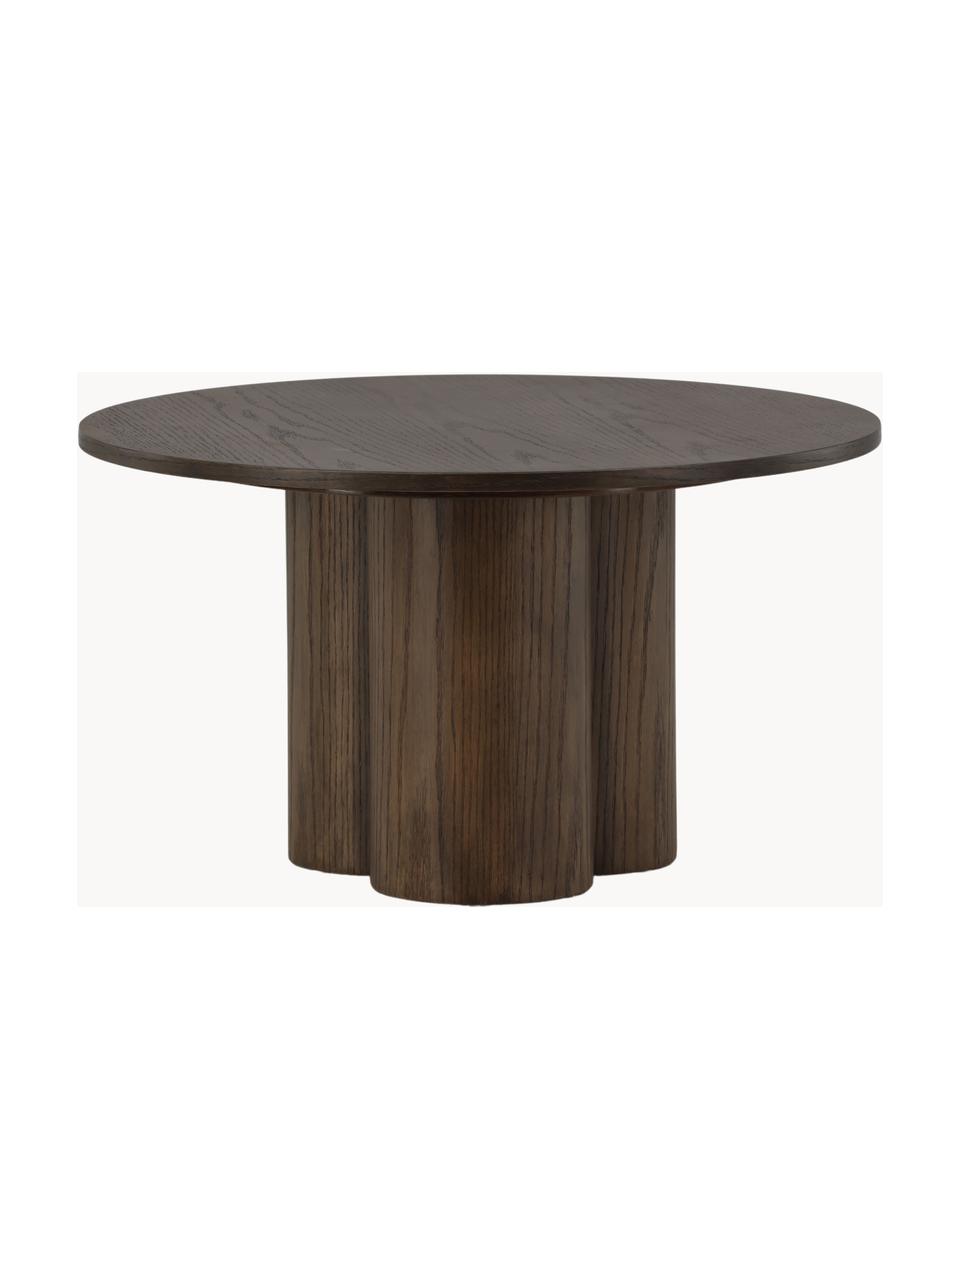 Rond houten salontafel Olivia, MDF met eikenhoutfineer, Hout, donker gelakt, Ø 80 cm